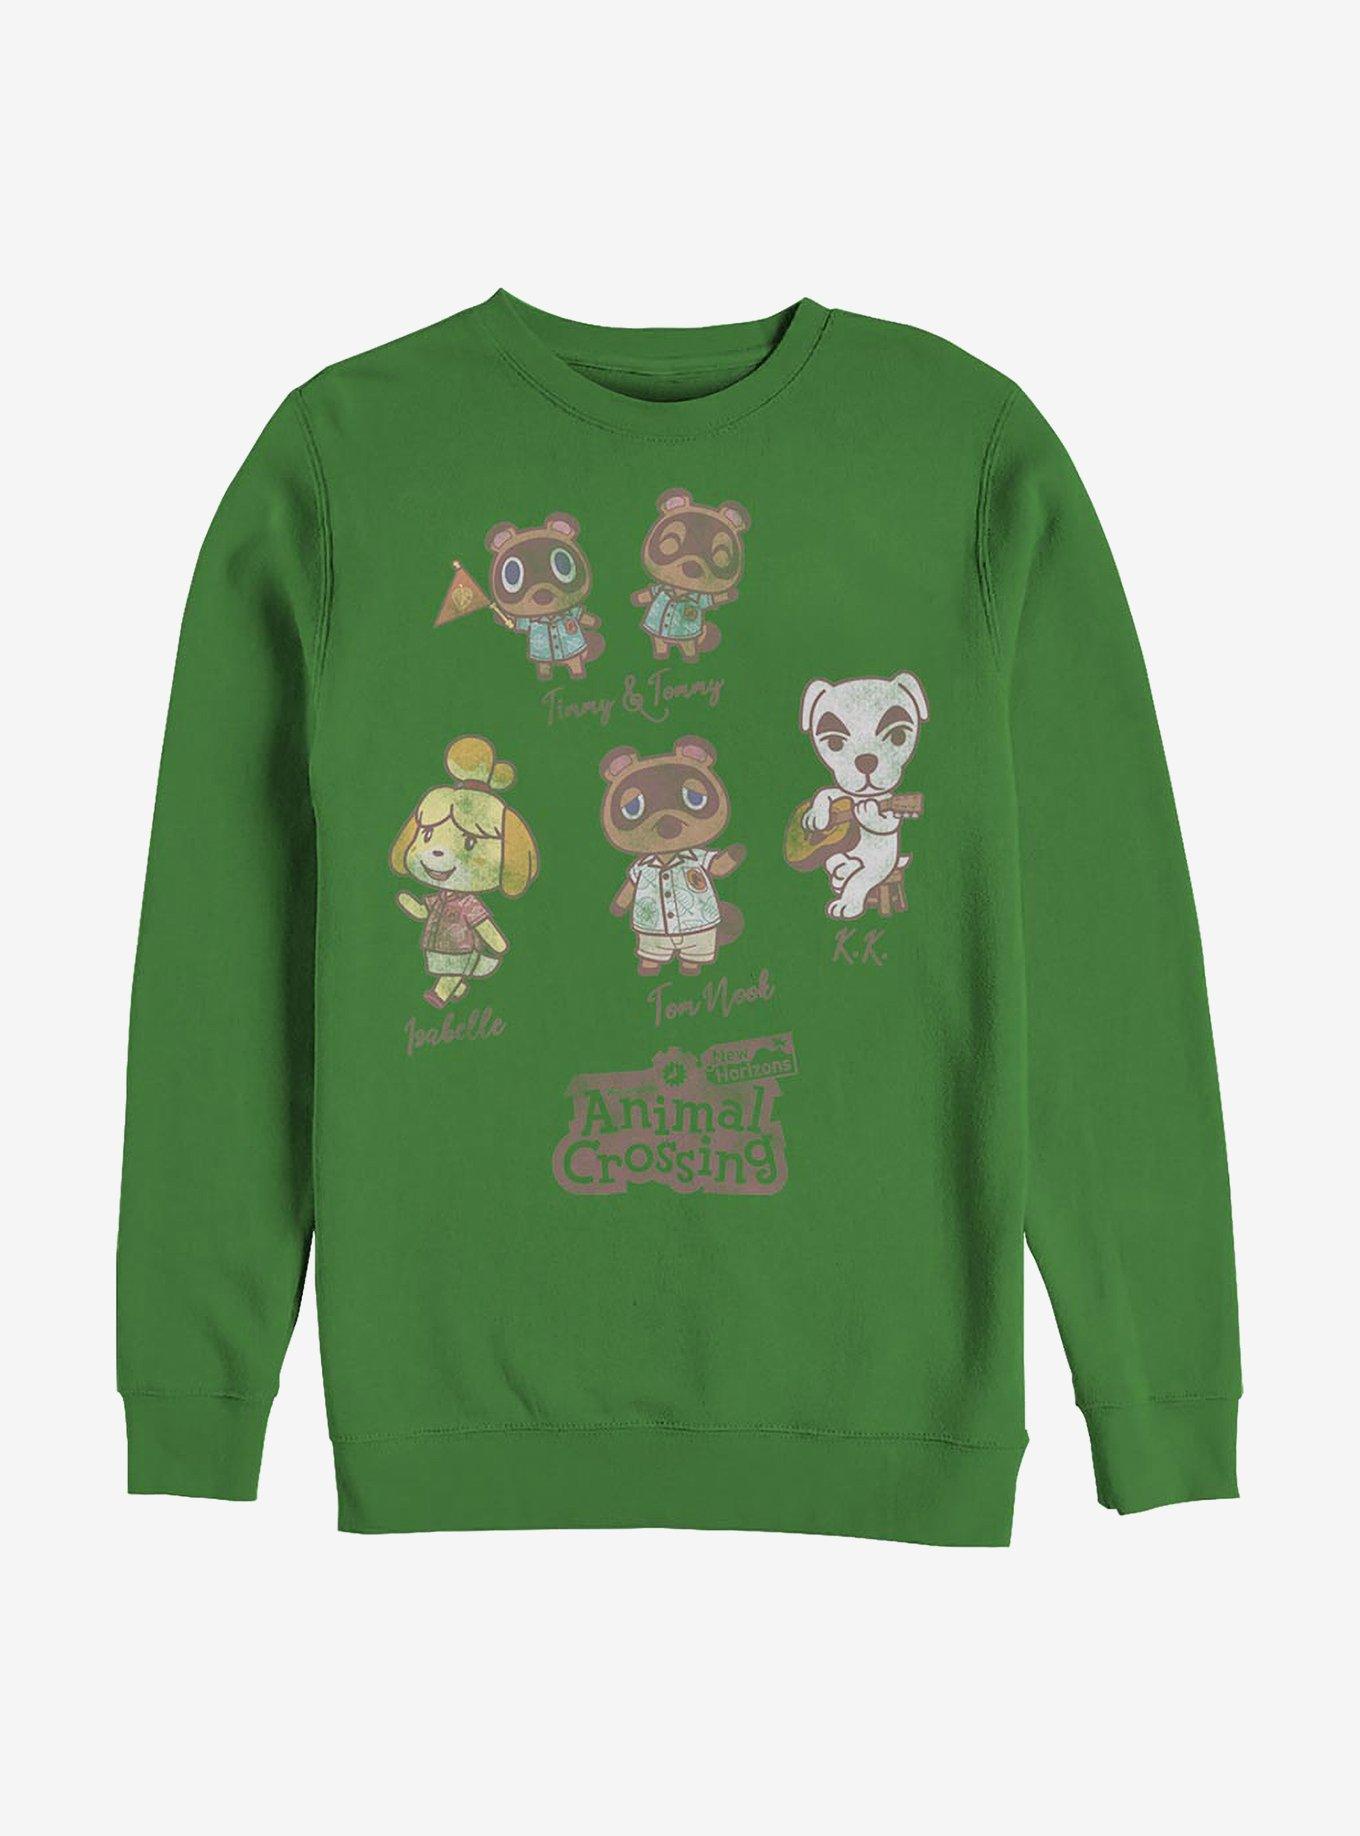 Nintendo Animal Crossing Character Textbook Crew Sweatshirt, KELLY, hi-res